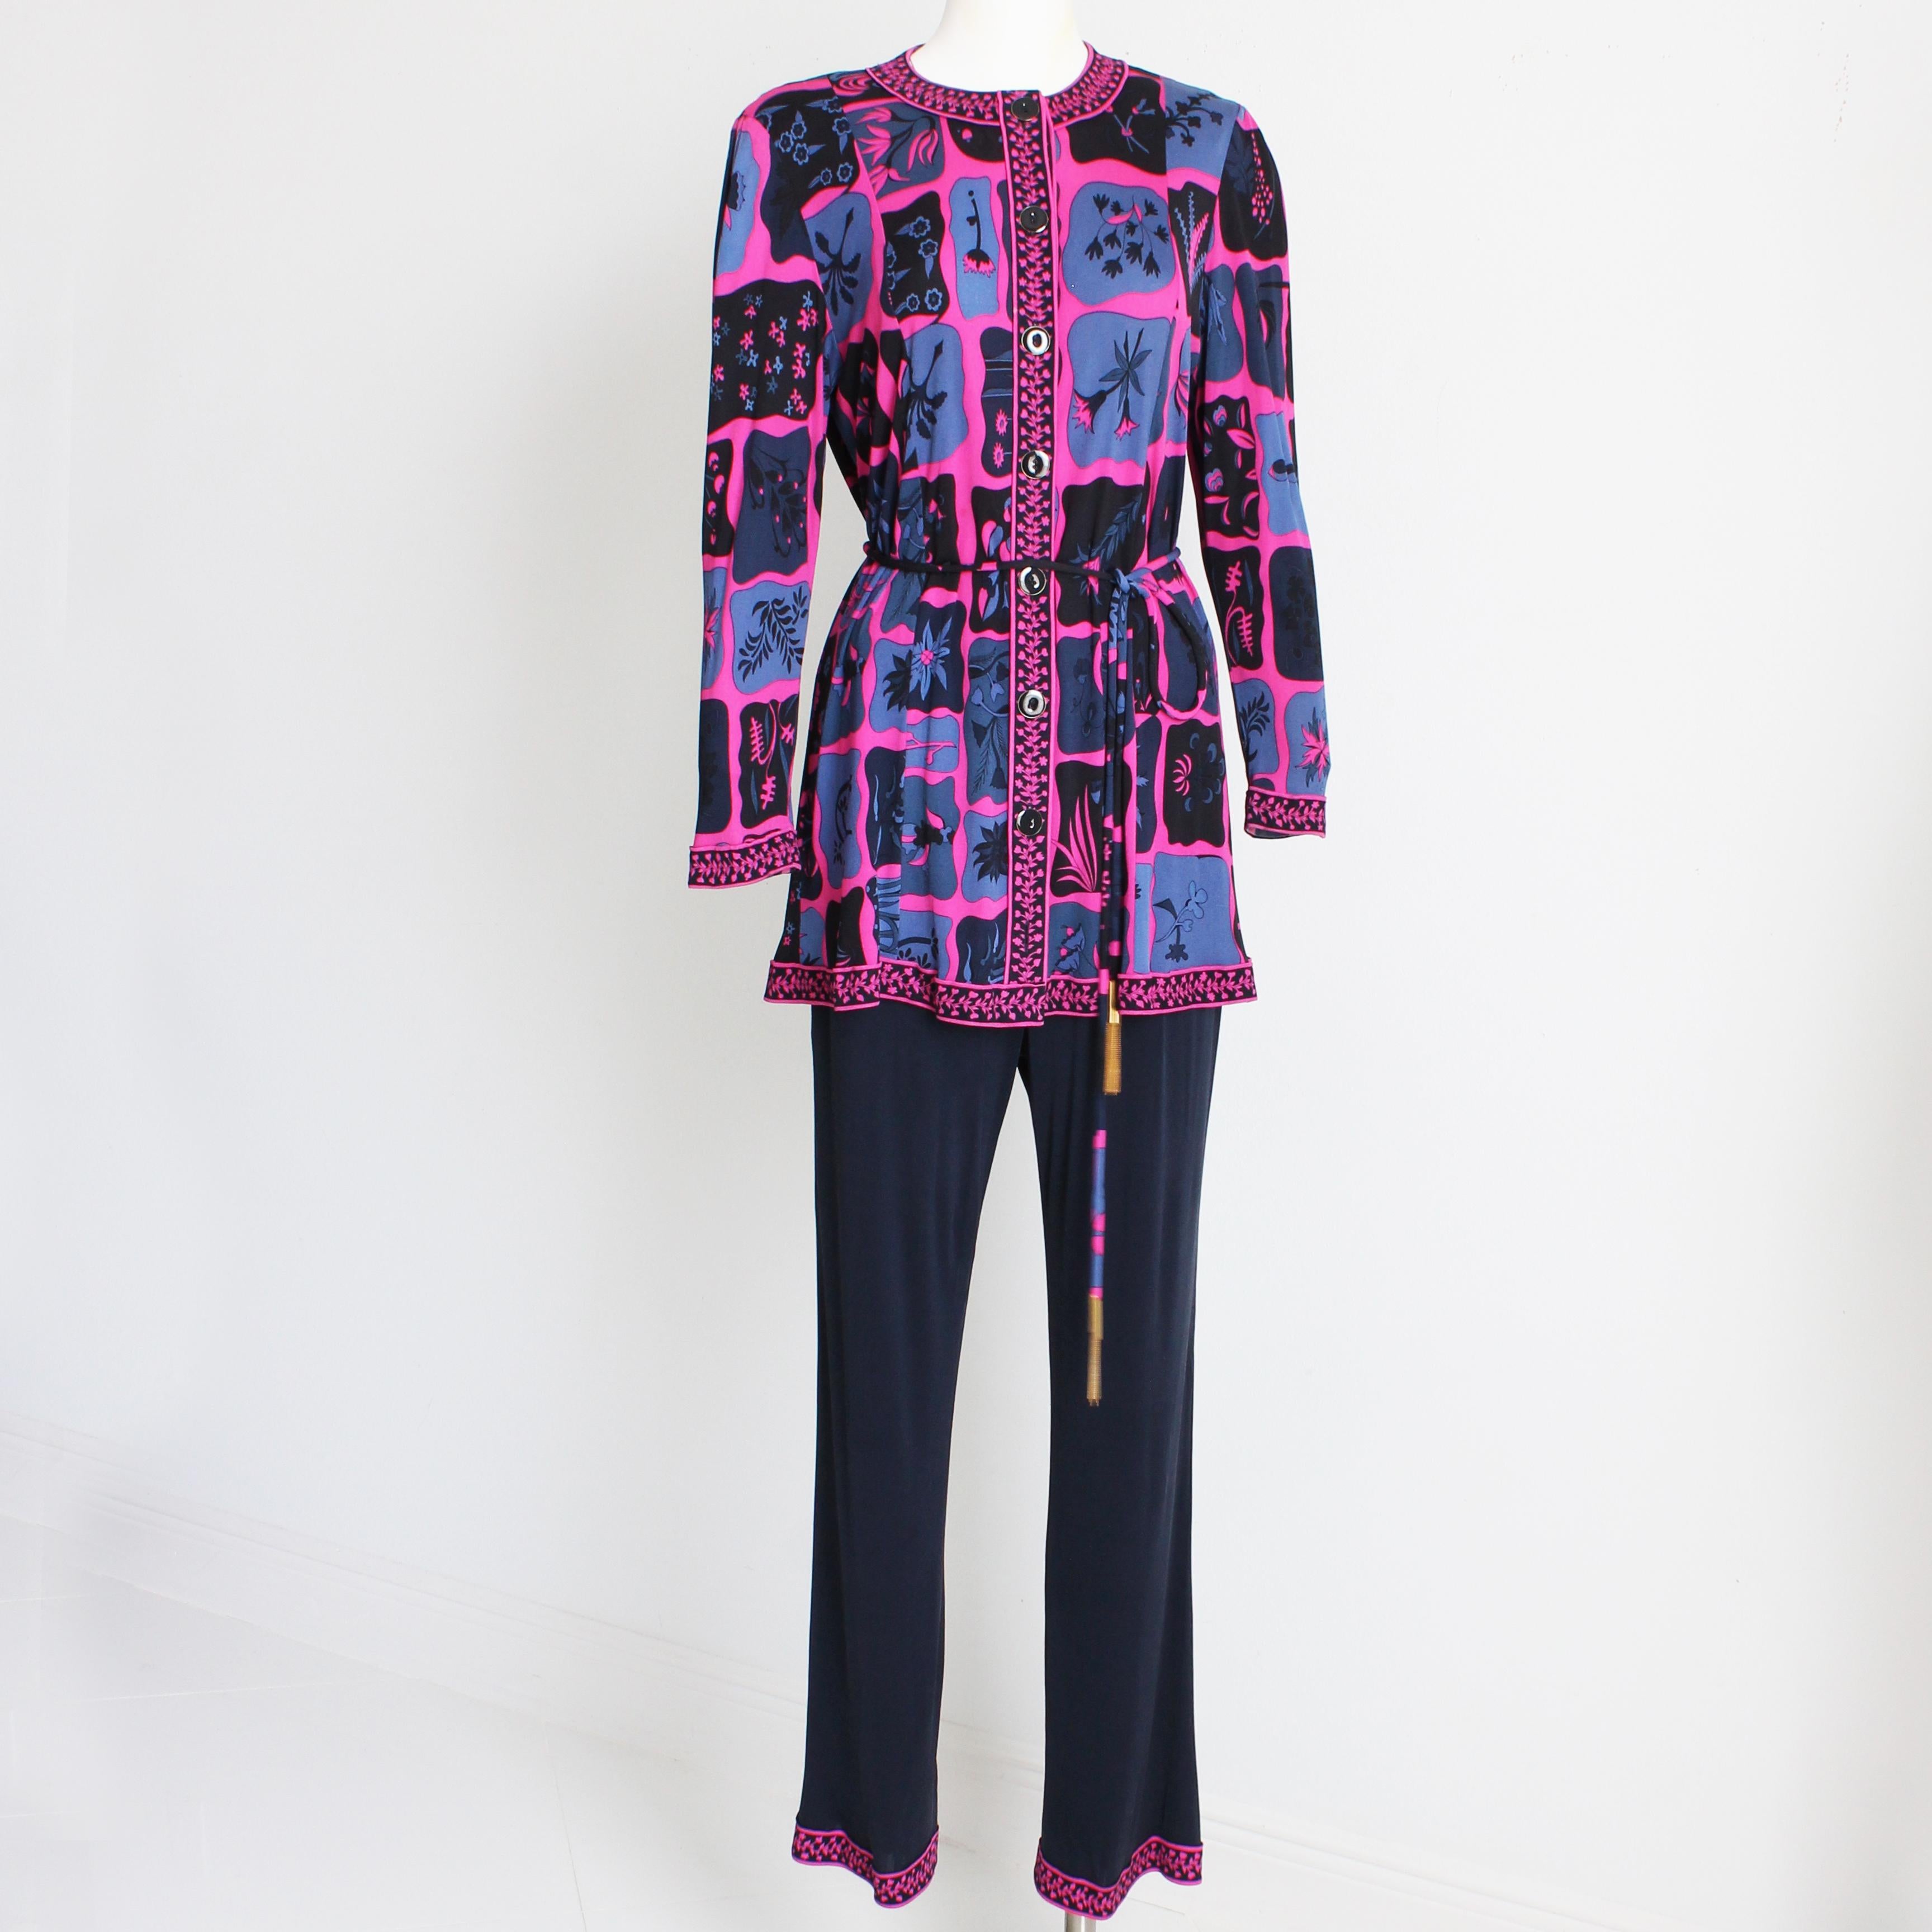 Averardo Bessi Suit Top Pants Belt 3pc Silk Jersey Floral Print Size 44 Rare 90s For Sale 5